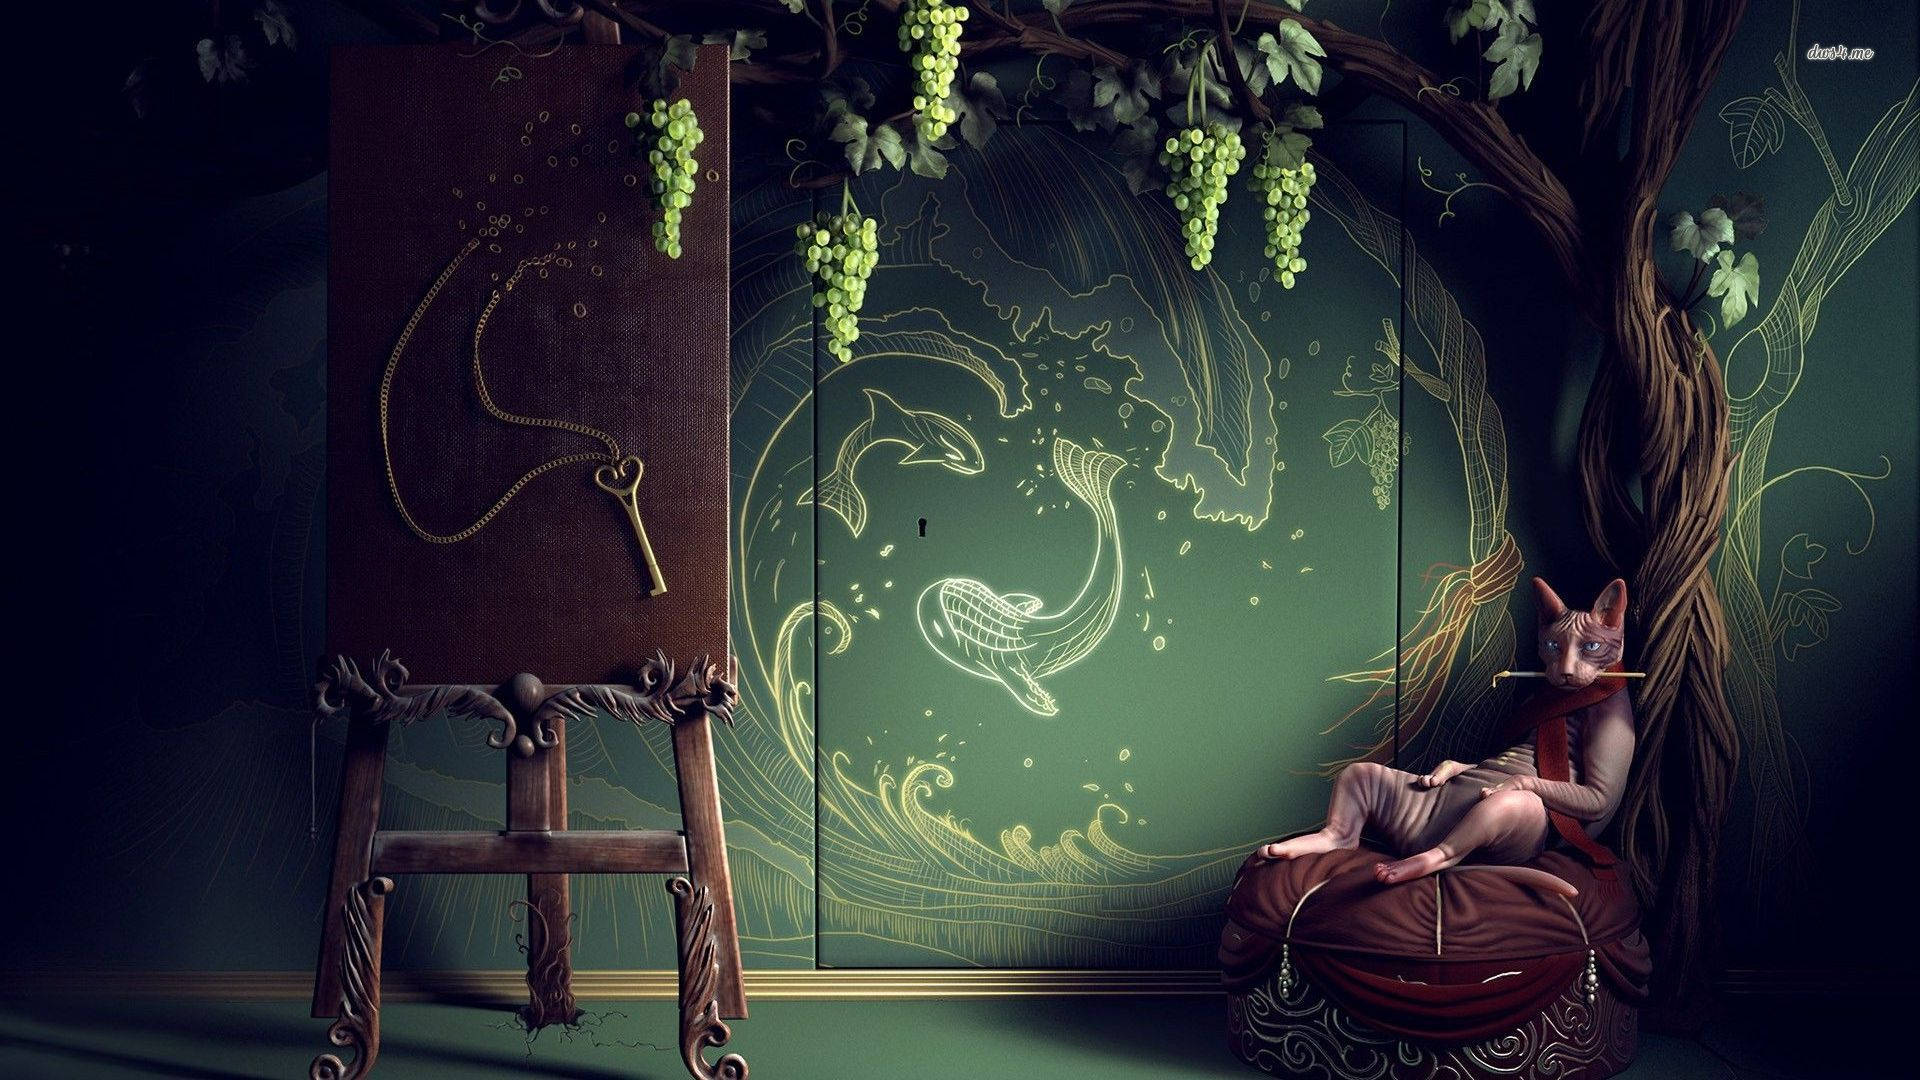 Cat Art Green Room With Tree Wallpaper